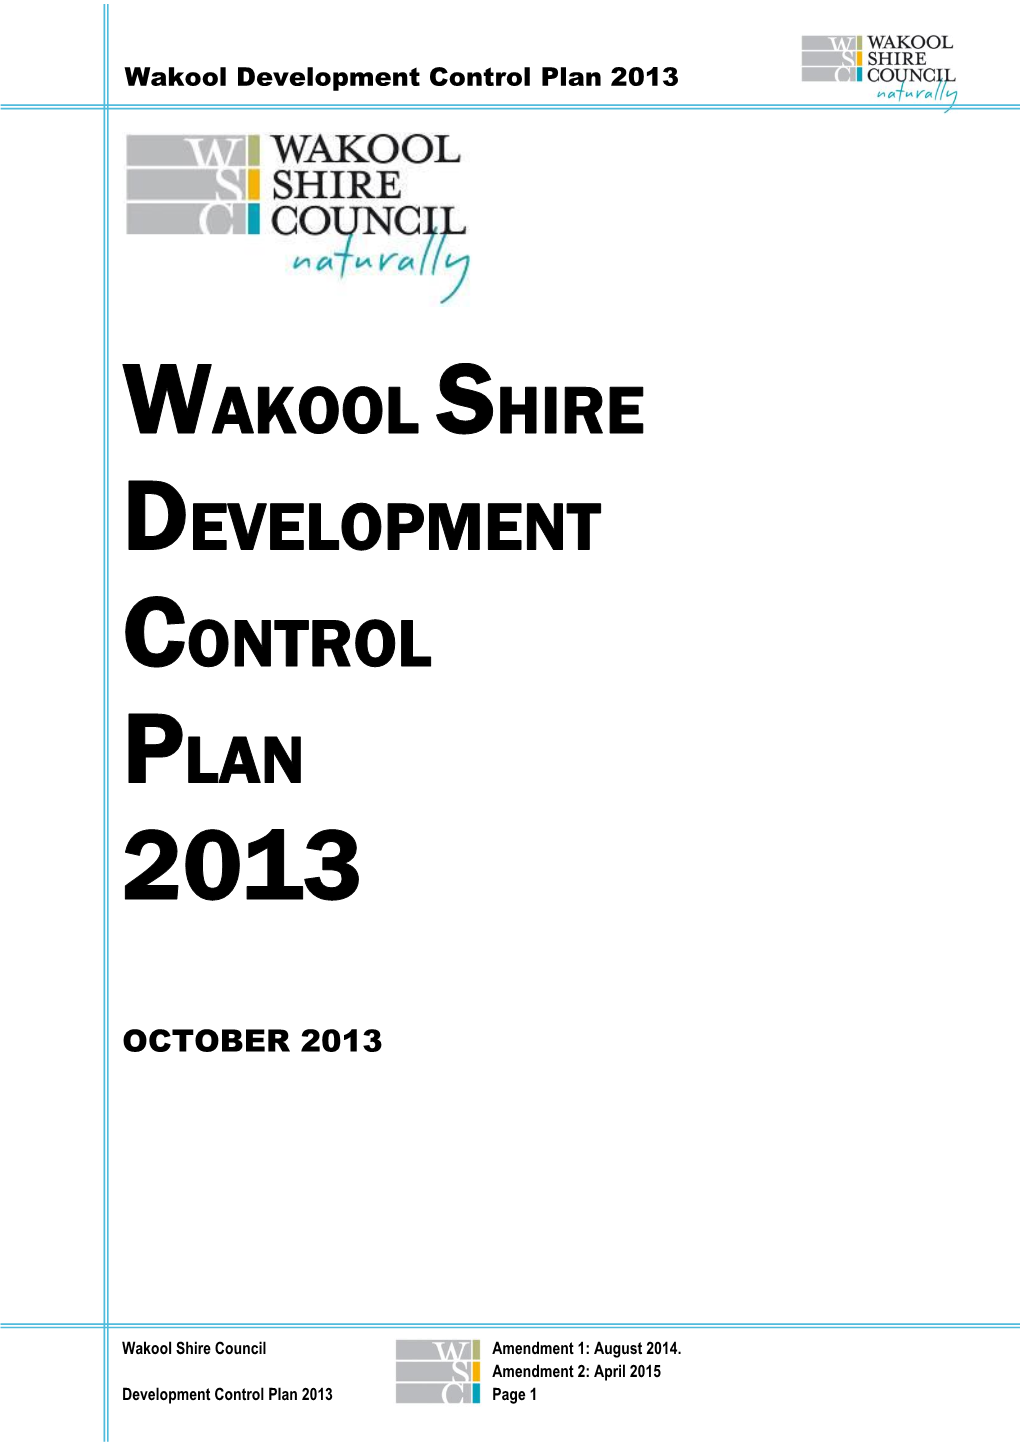 Wakool Development Control Plan 2013